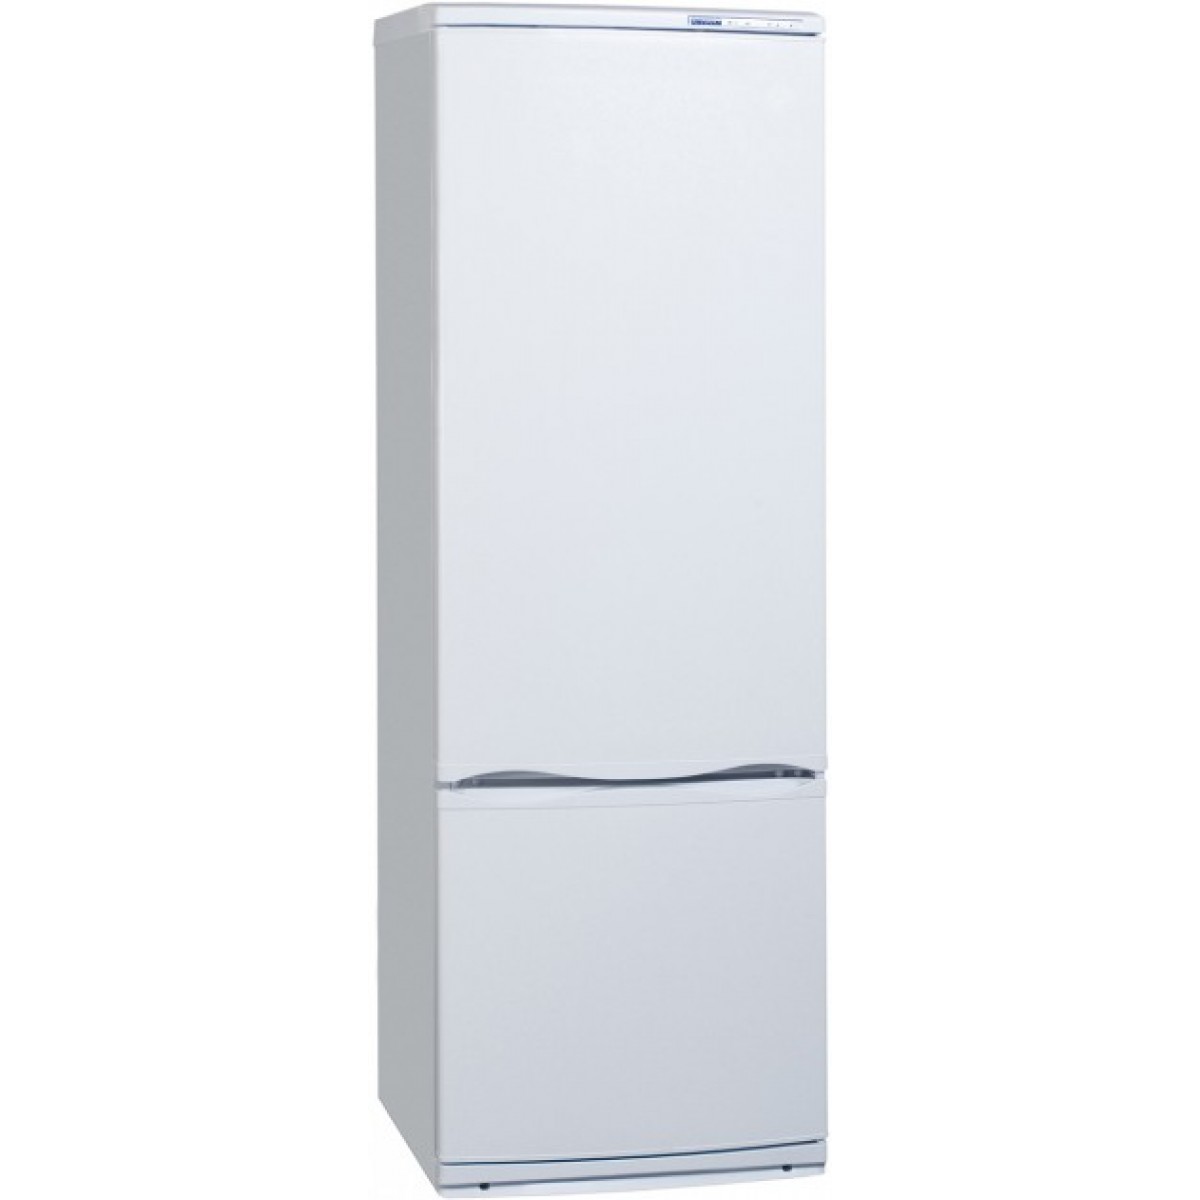 М видео атлант купить. Холодильник XM 4011-022 ATLANT. Холодильник Атлант хм 4011-022. Атлант хм 4013-022. Холодильник Атлант XM 4011-022.